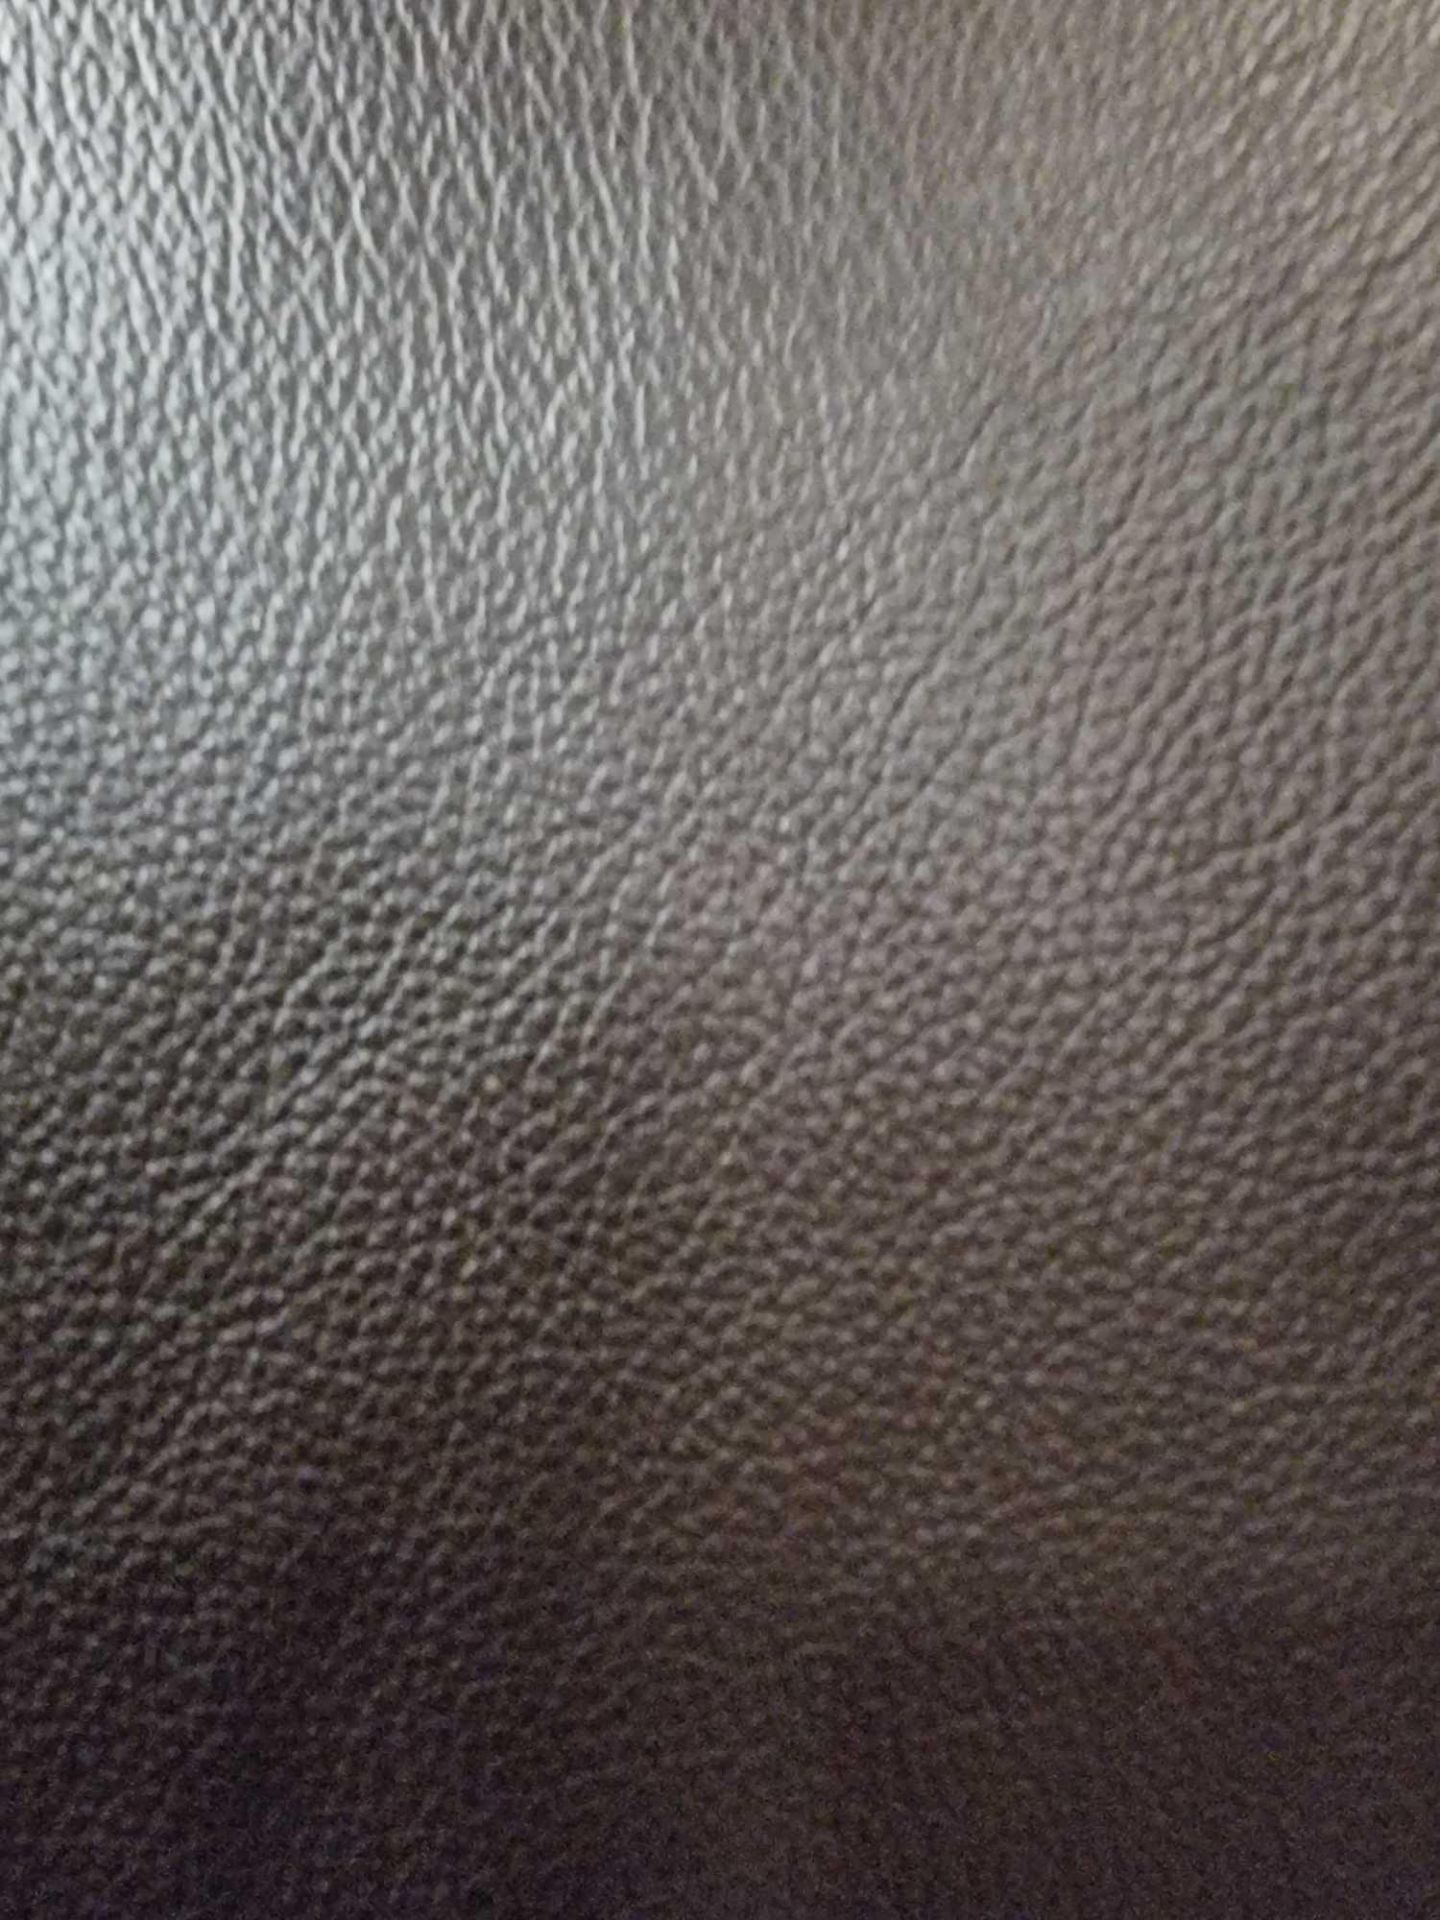 Mastrotto Hudson Chocolate Leather Hide approximately 3.04mÂ² 1.9 x 1.6cm - Bild 2 aus 2